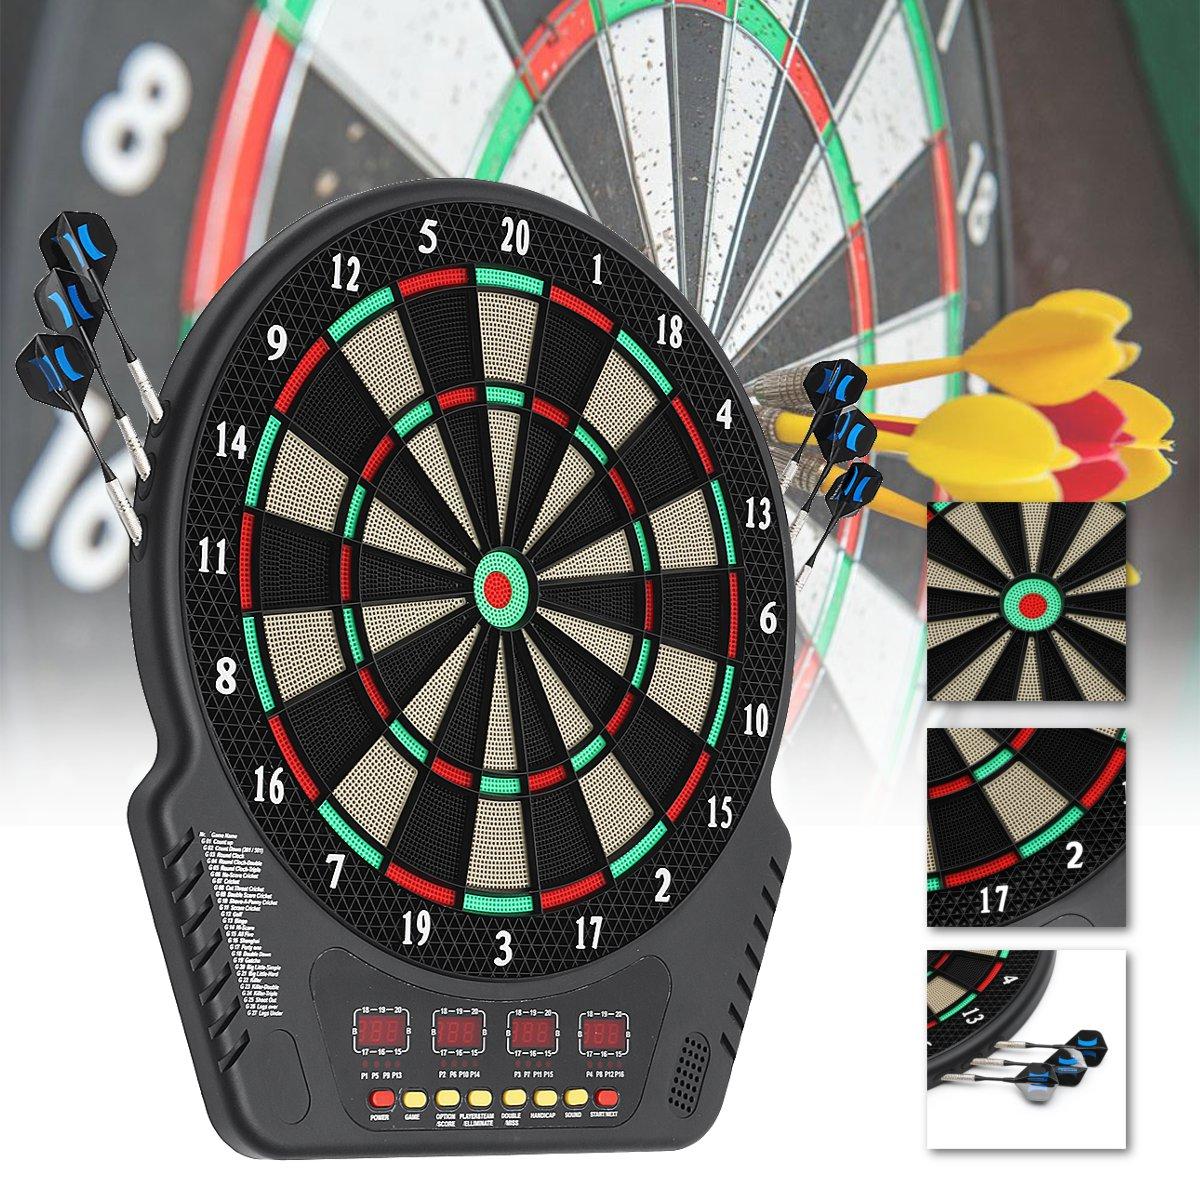 plastic darts for electronic dart board